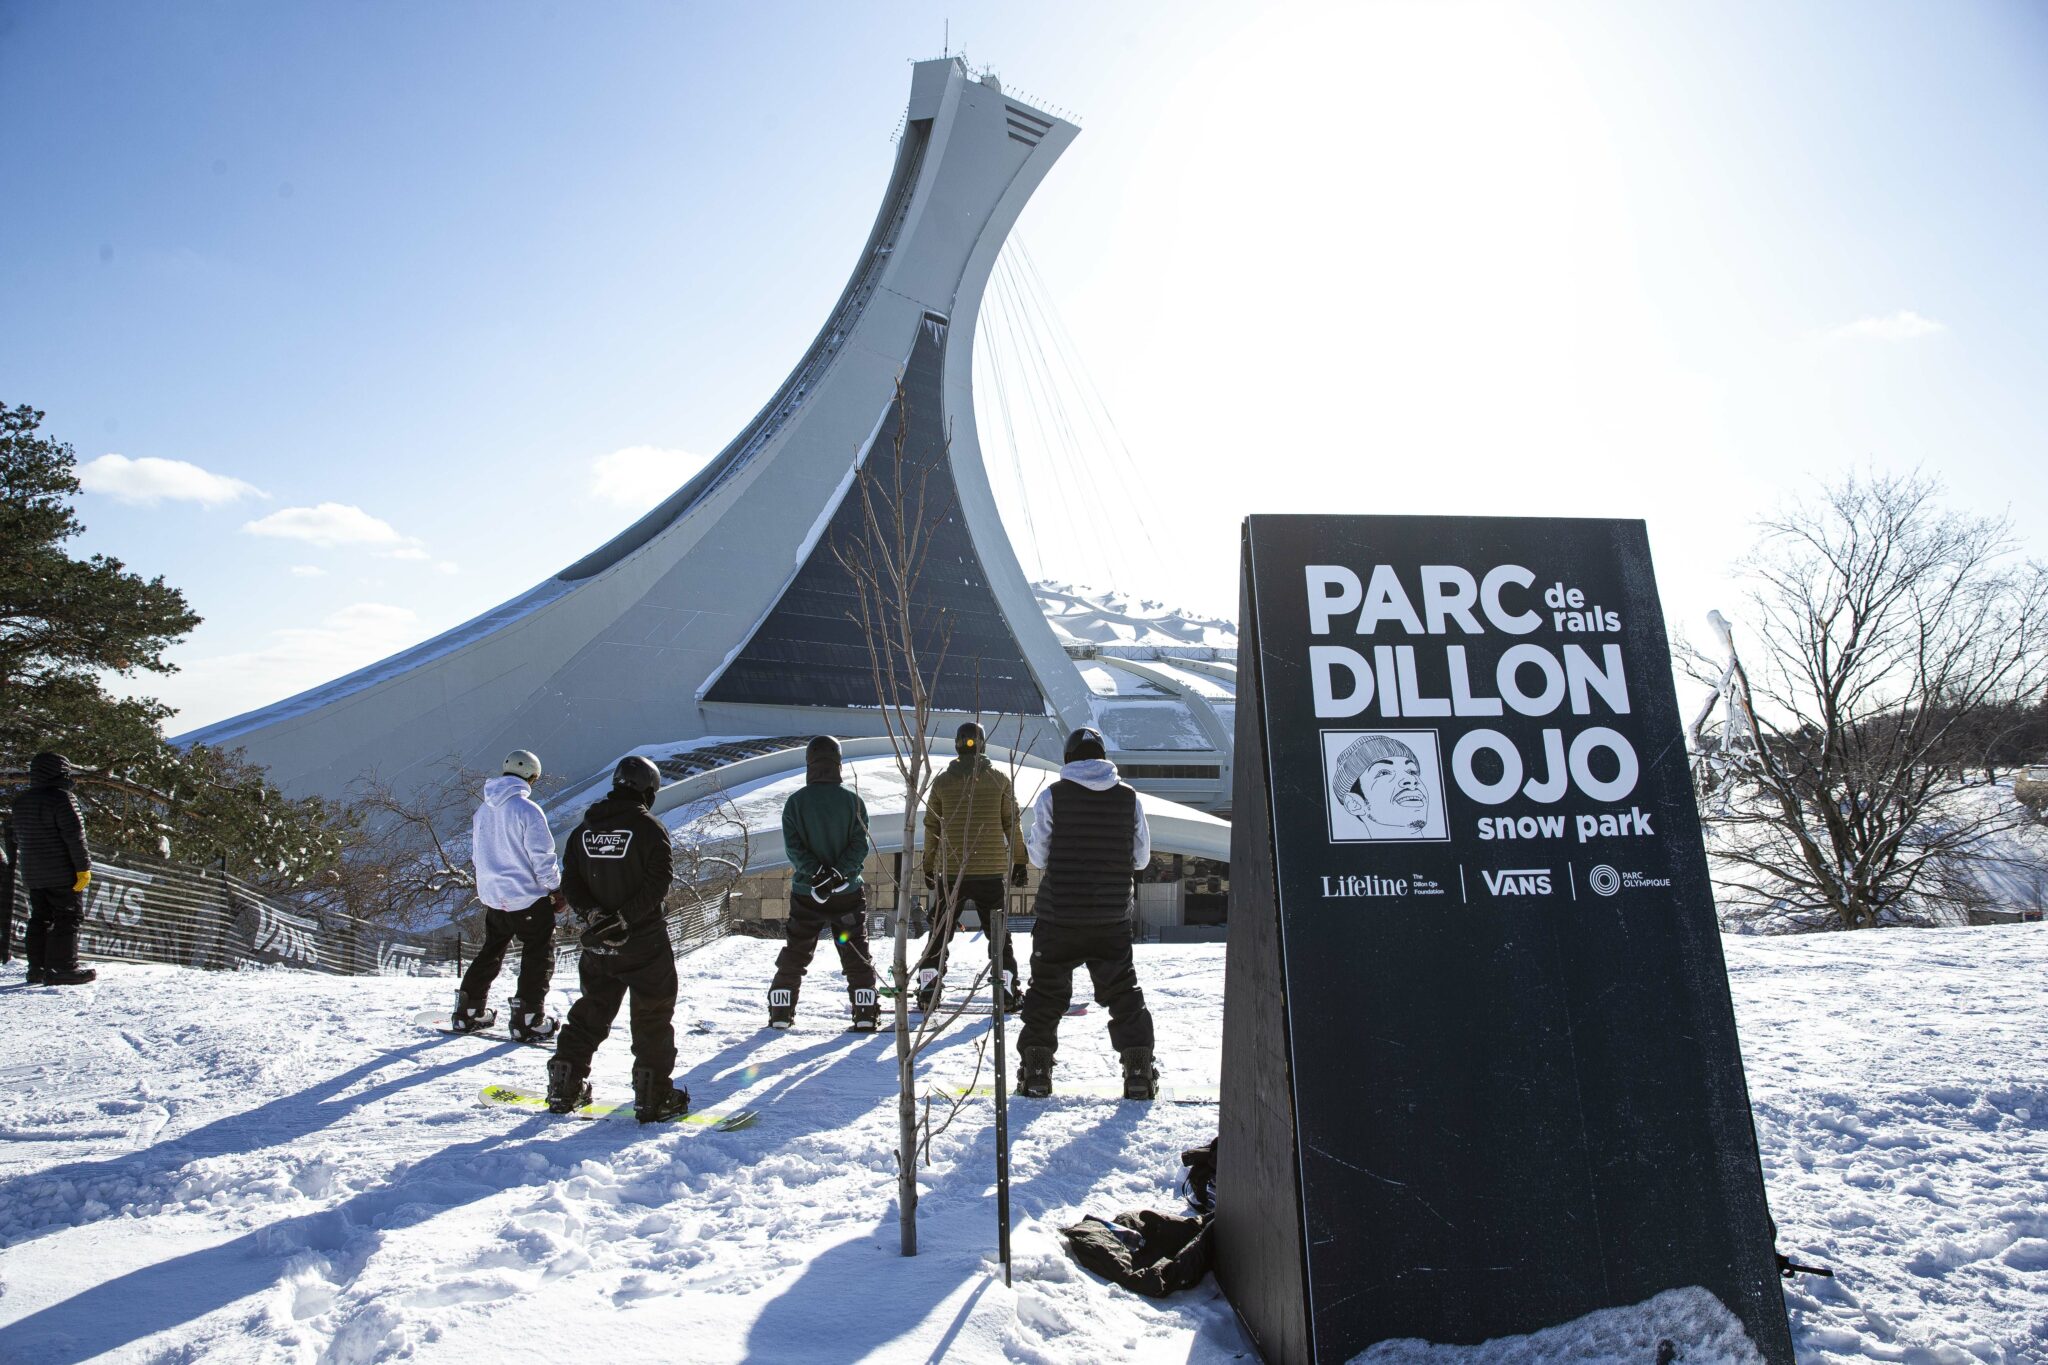 Free Terrain Park Built at Montreal's Olympic Stadium